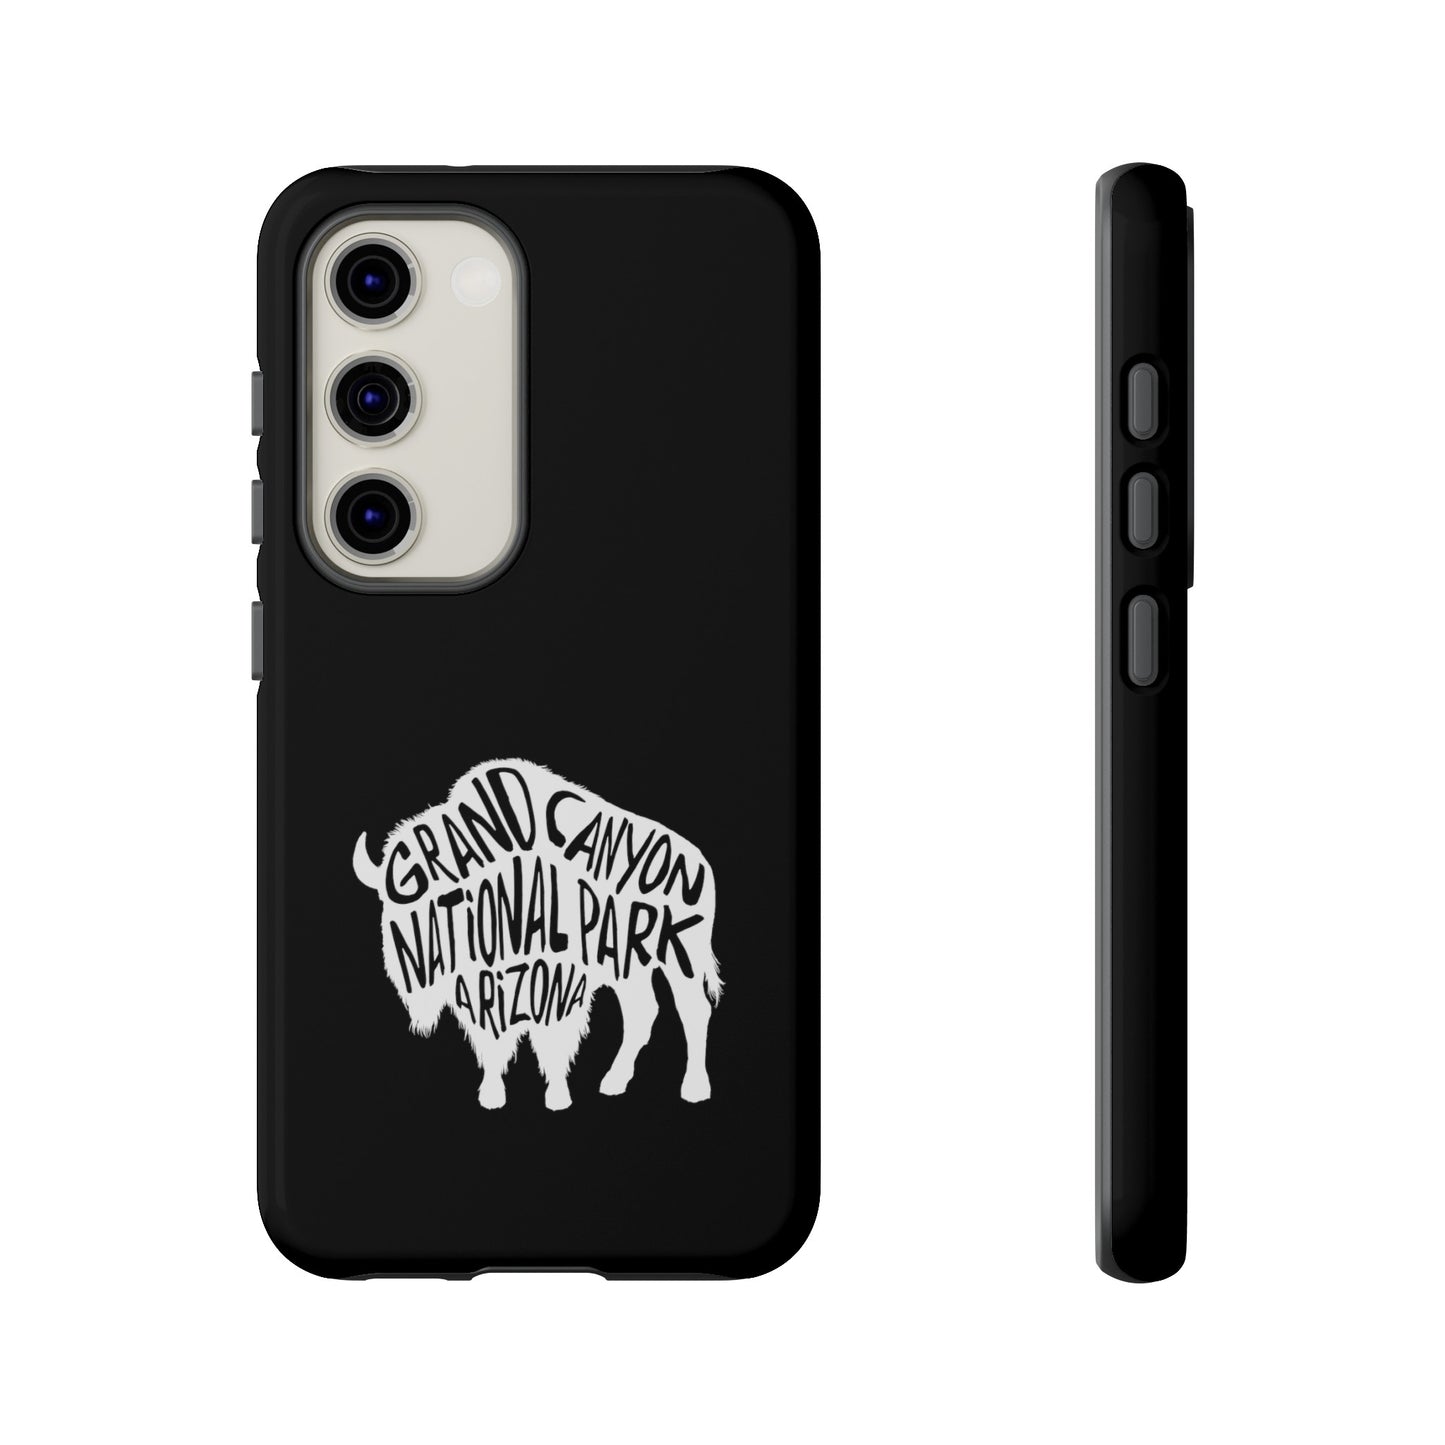 Grand Canyon National Park Phone Case - Bison Design